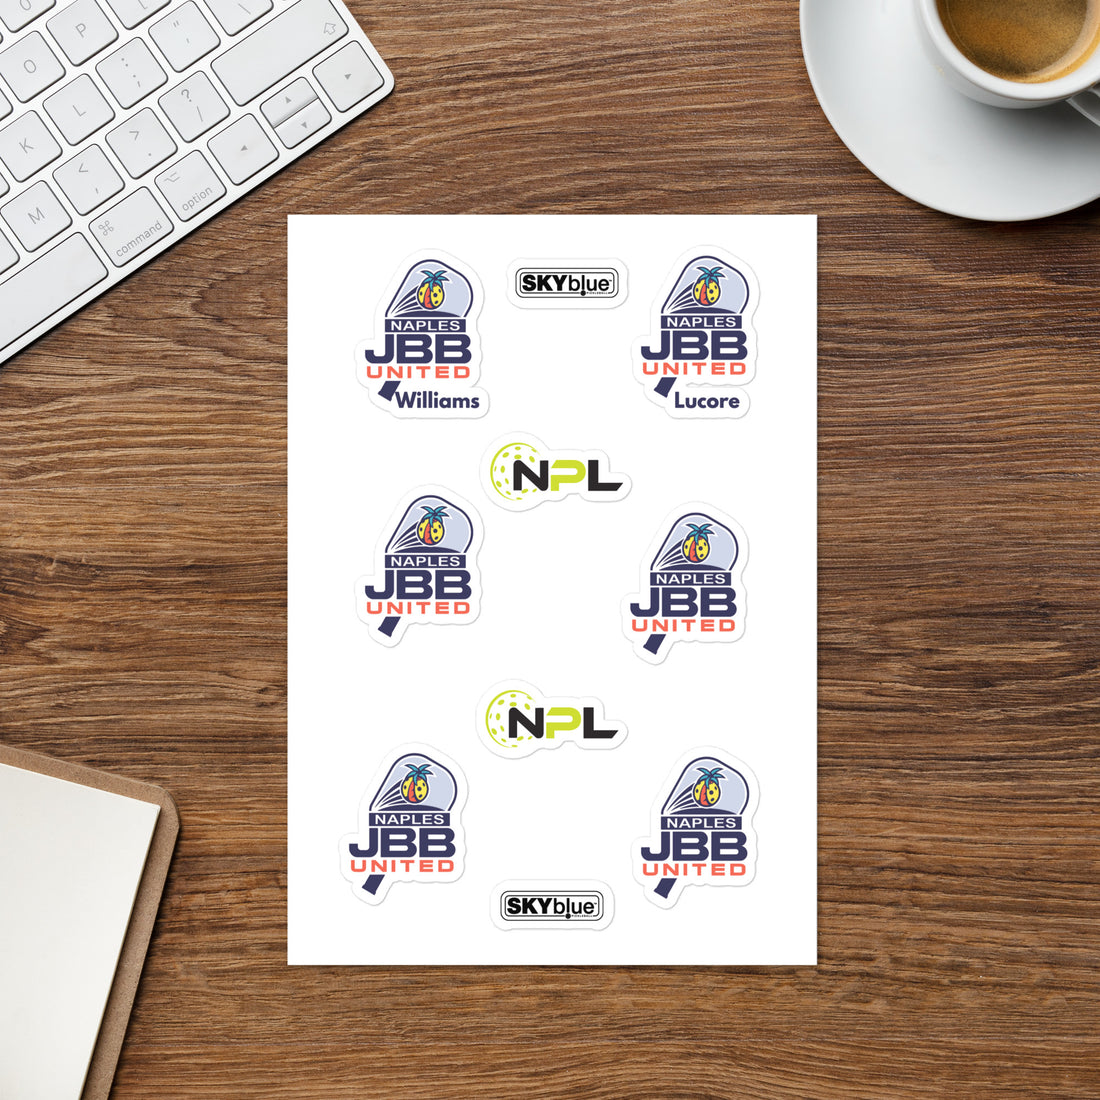 Naples JBB United™ - NPL™ Stickers ( Williams, Lucore)